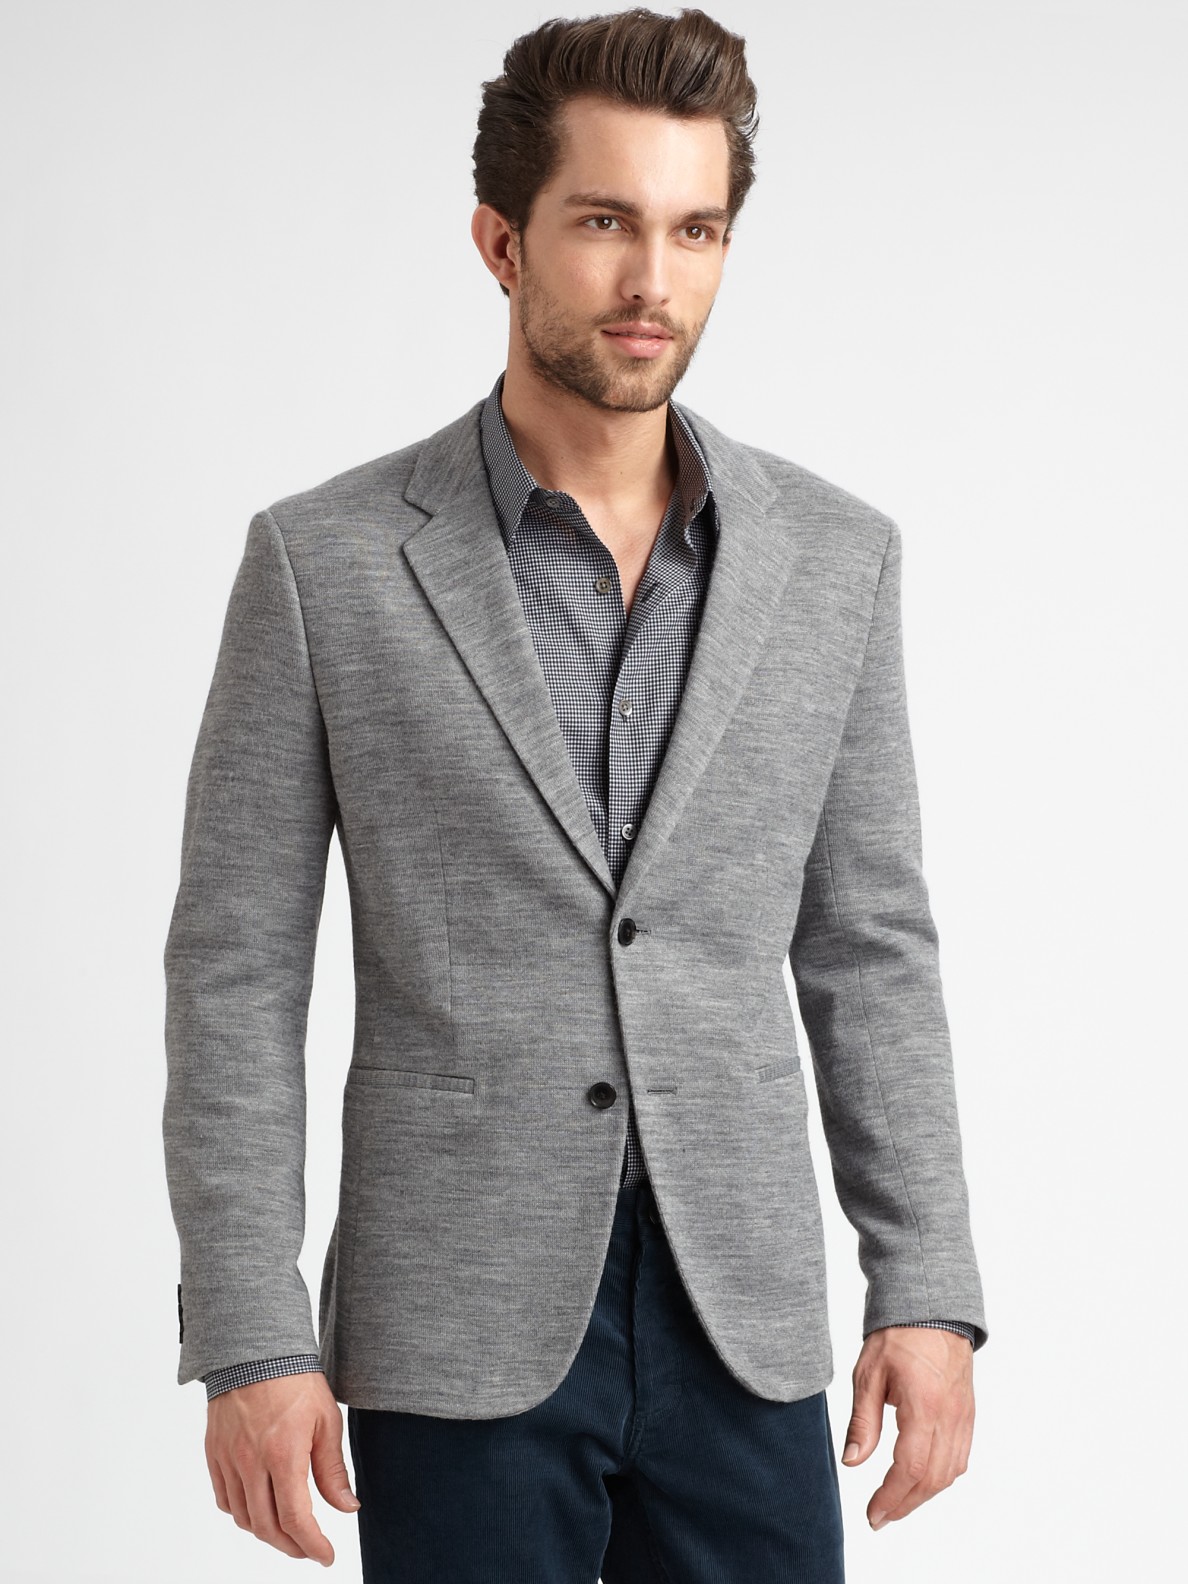 Theory Knit Blazer in Grey (Gray) for Men - Lyst